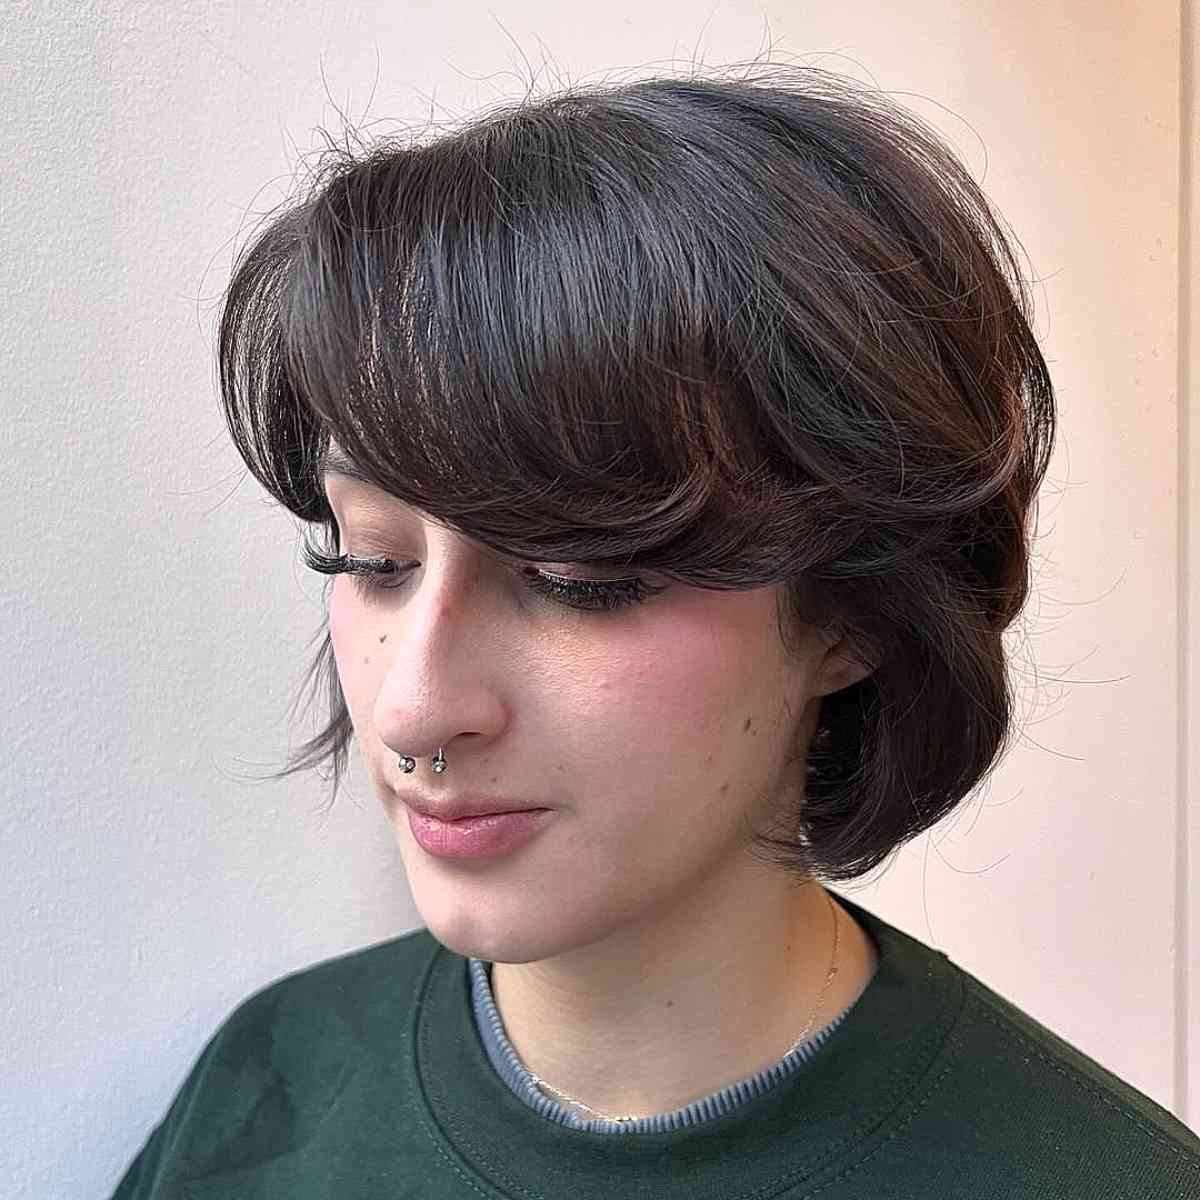 Soft layered bob gender neutral haircut with face-framing bangs